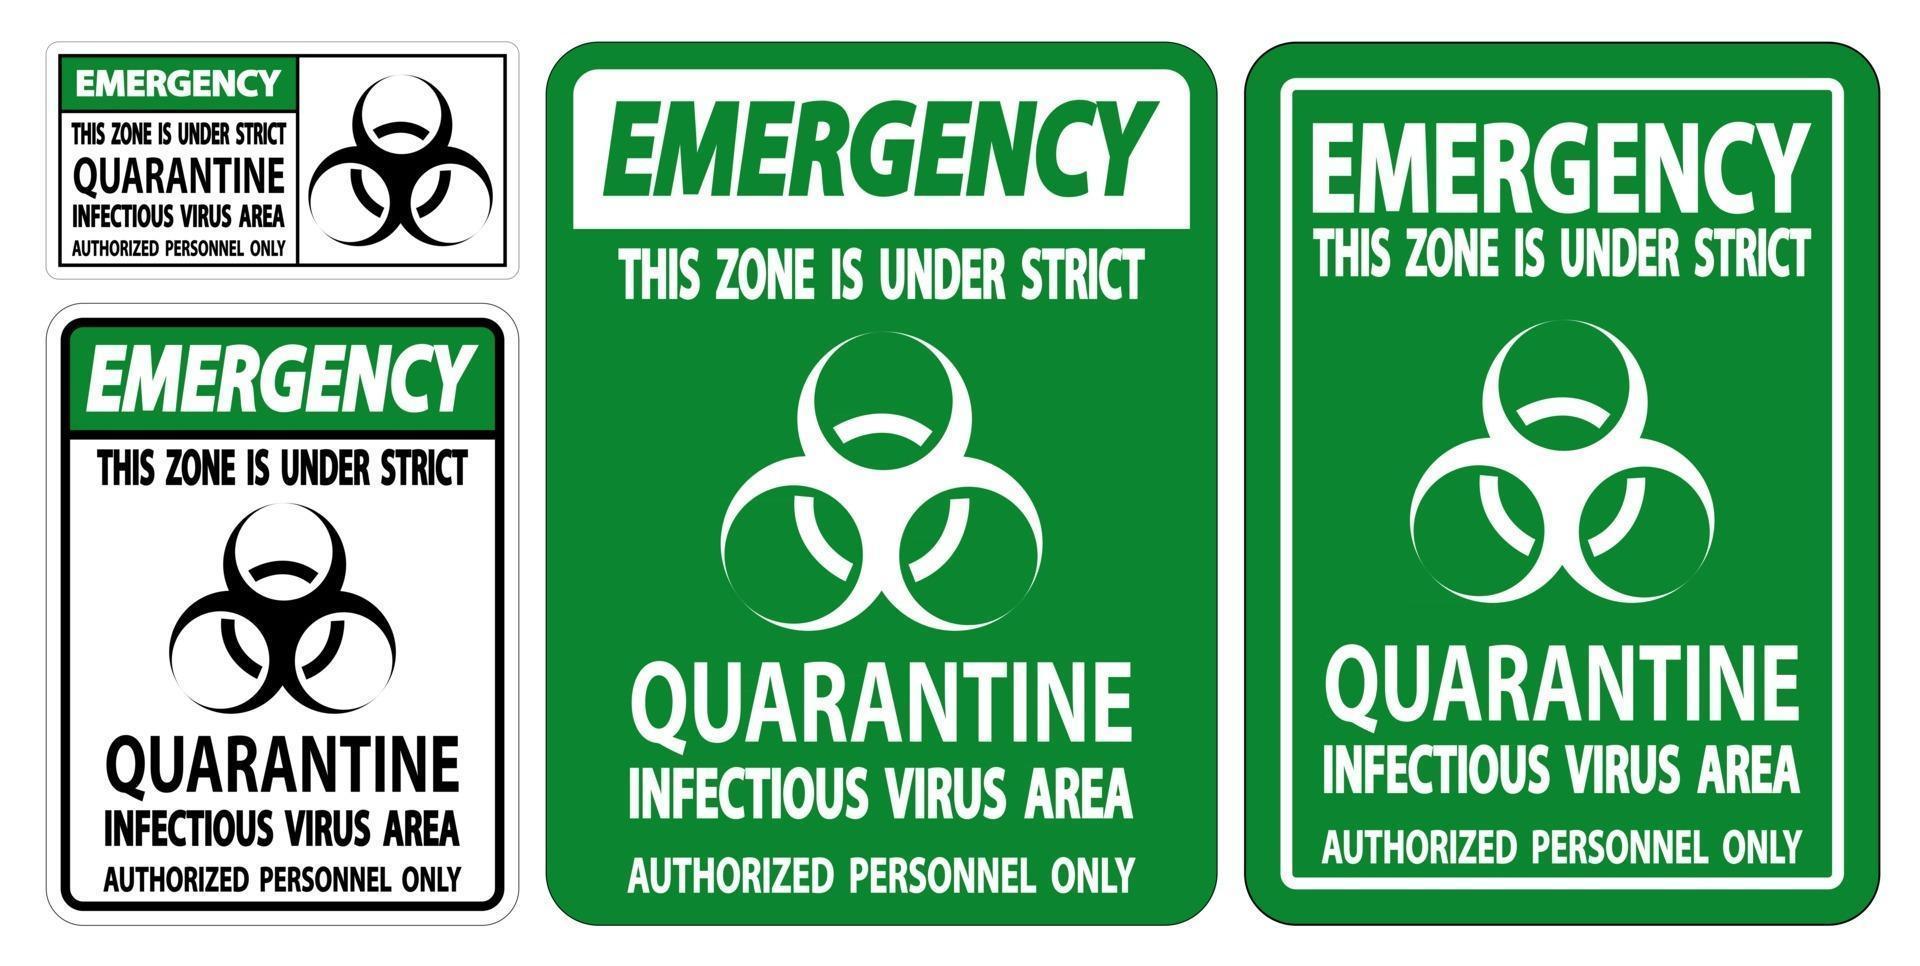 Emergency Quarantine Infectious Virus Area Sign Isolate On White Background,Vector Illustration EPS.10 vector